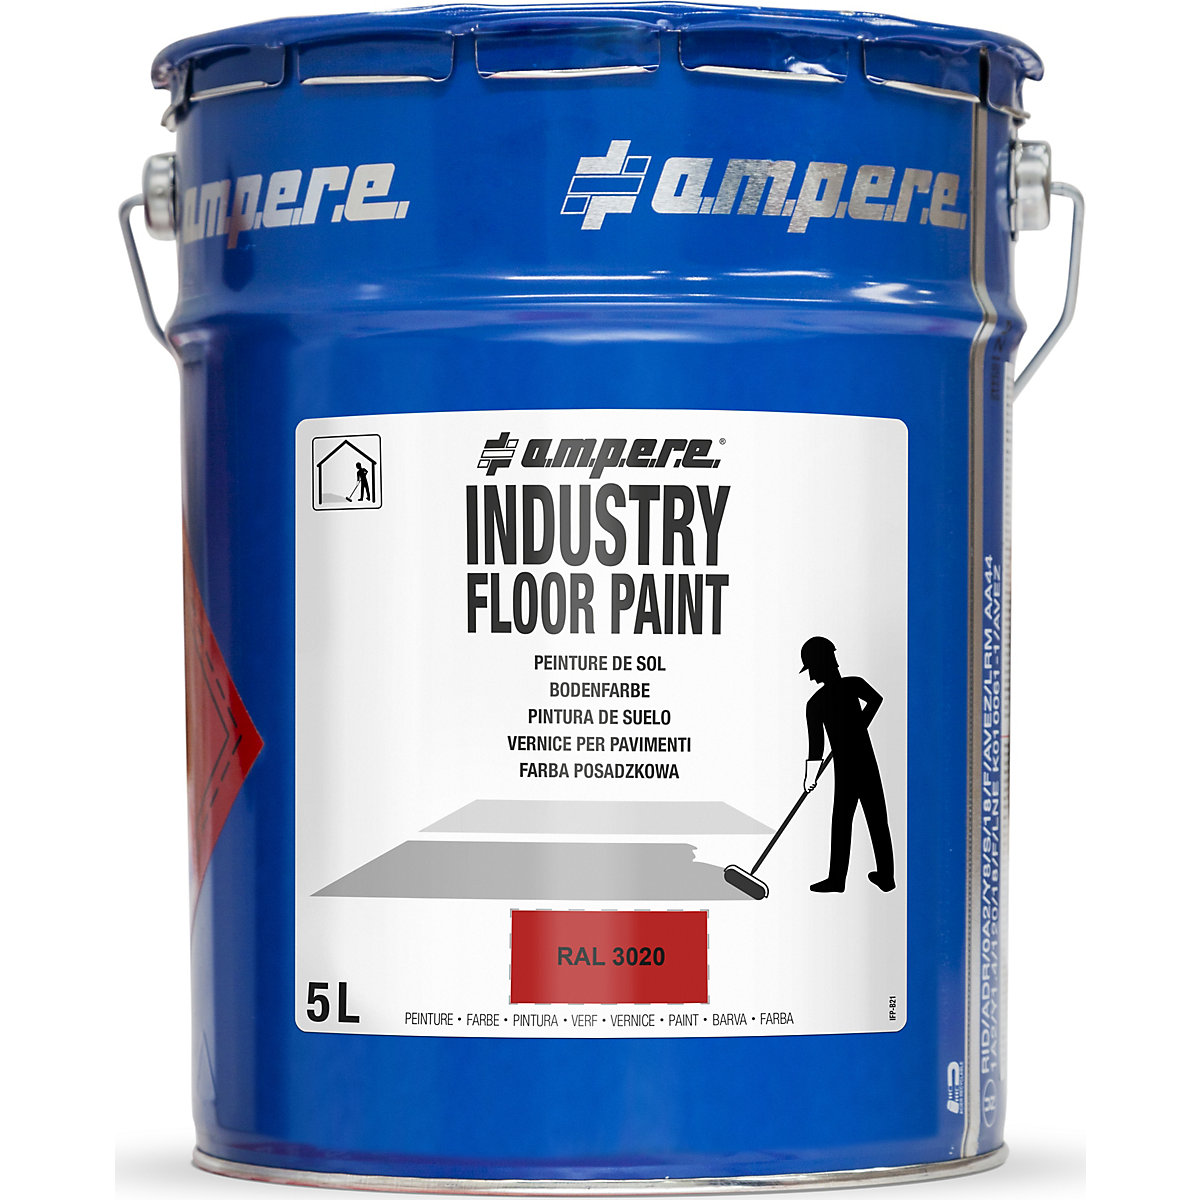 Farba do znakowania podłoża Industry Floor Paint® – Ampere